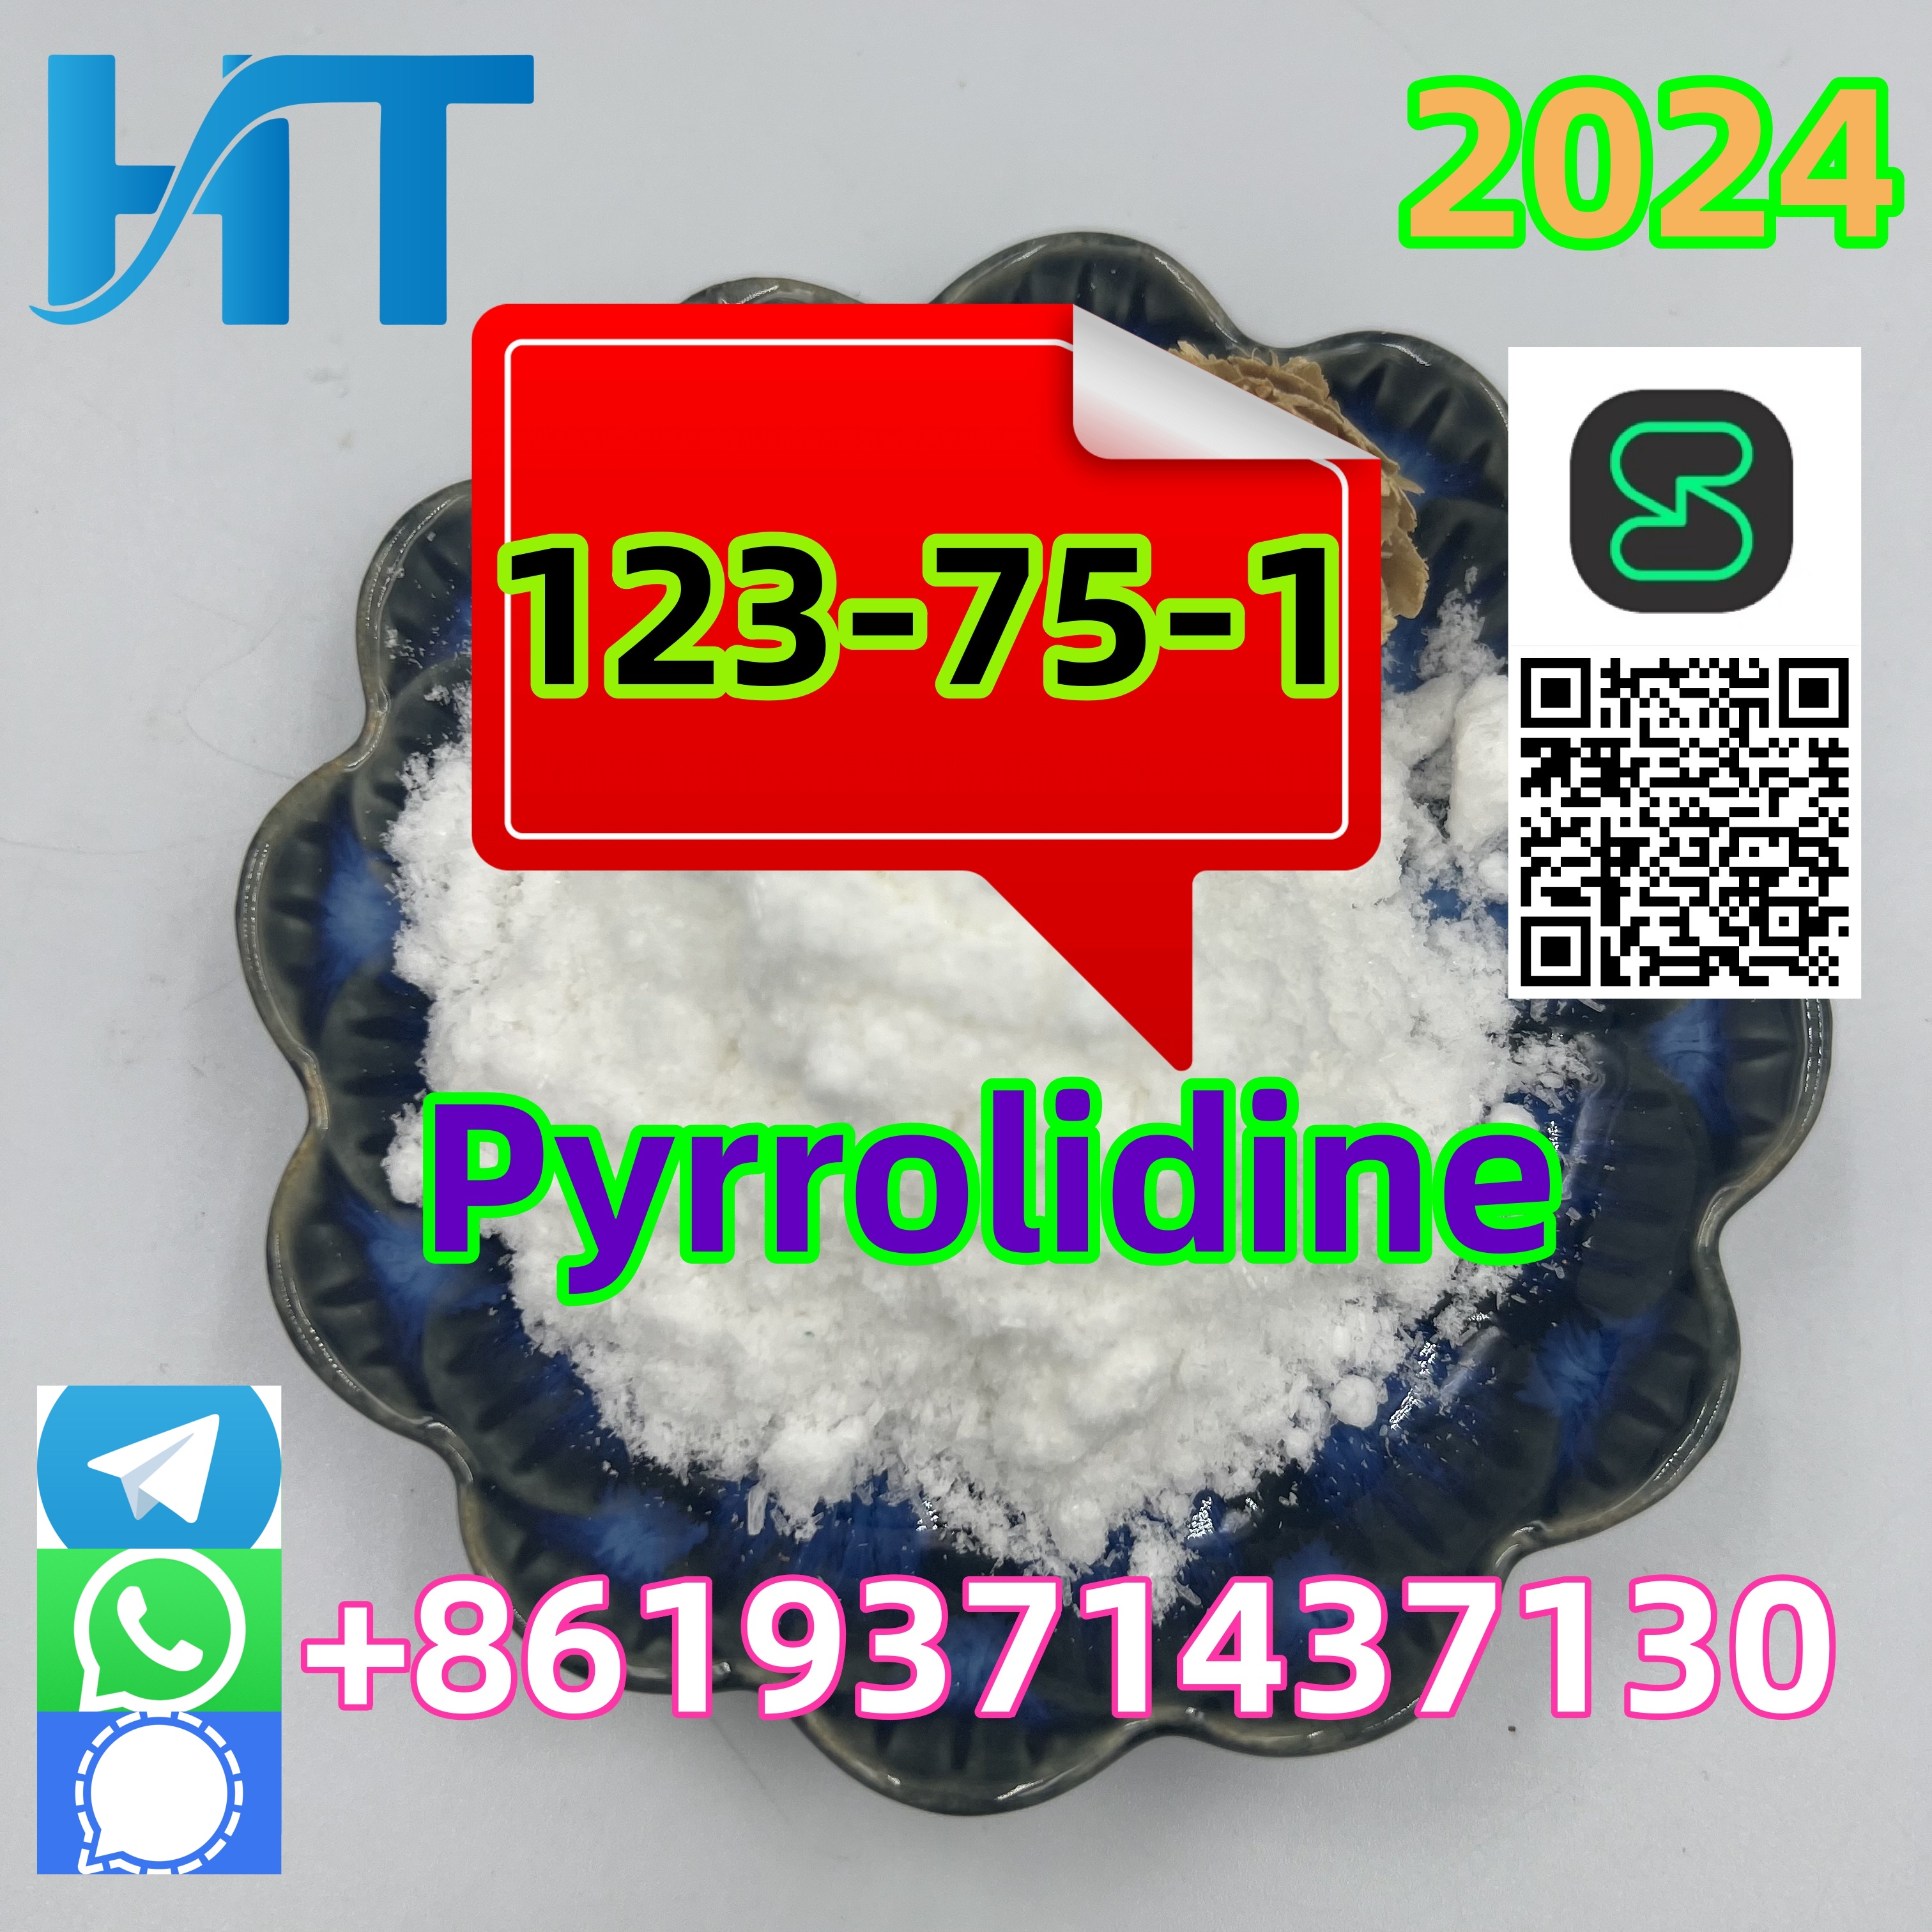 PMK powder or oil CAS 123-75-1 Pyrrolidine